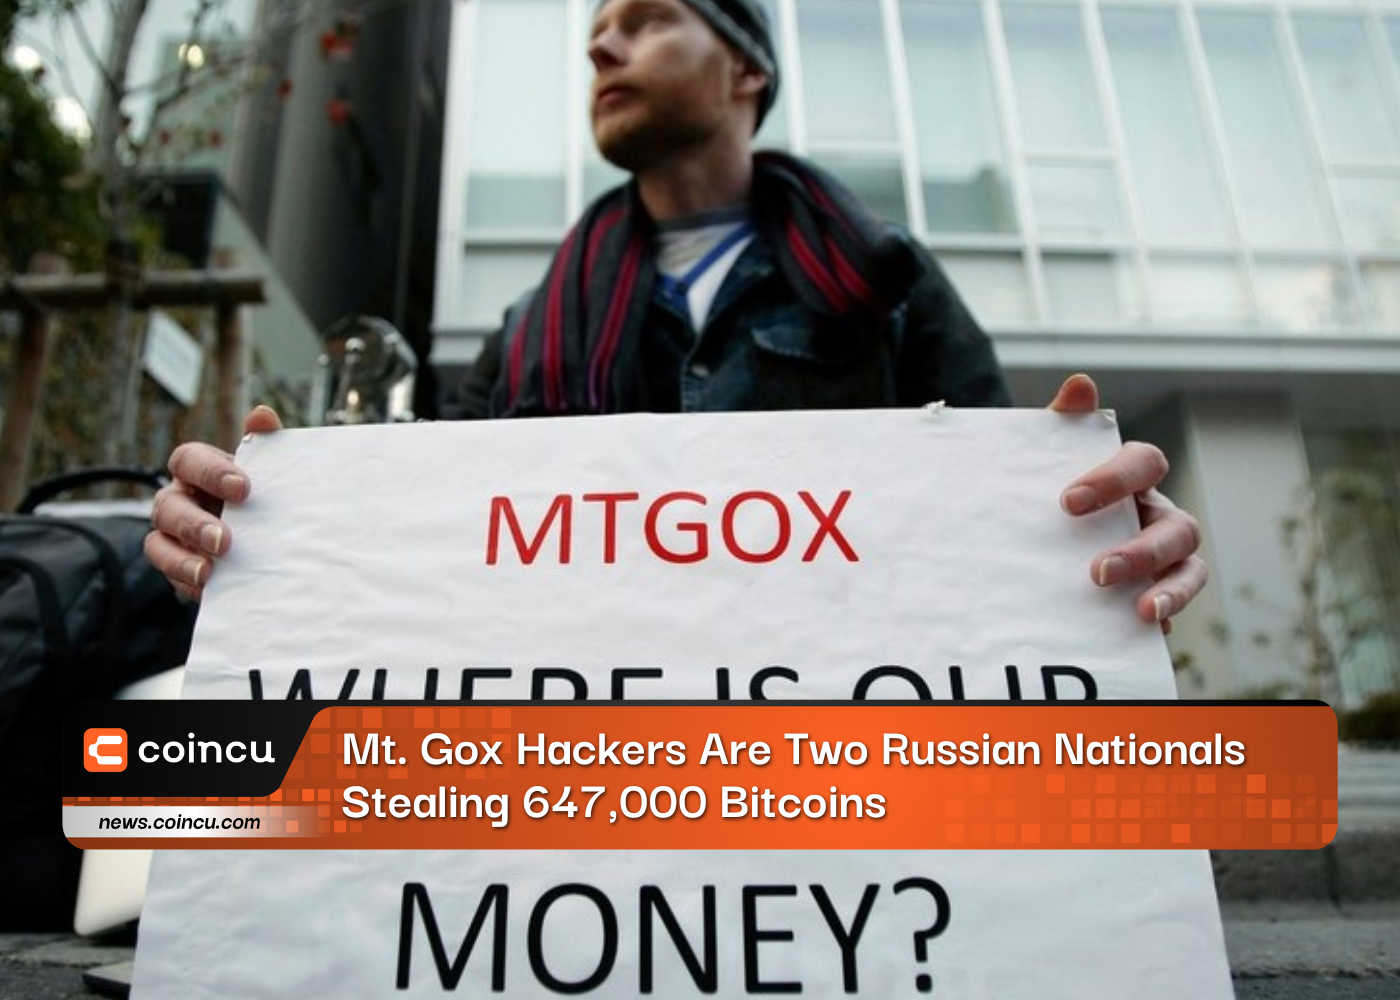 Mt. Gox 黑客是两名俄罗斯国民窃取了 647,000 个比特币